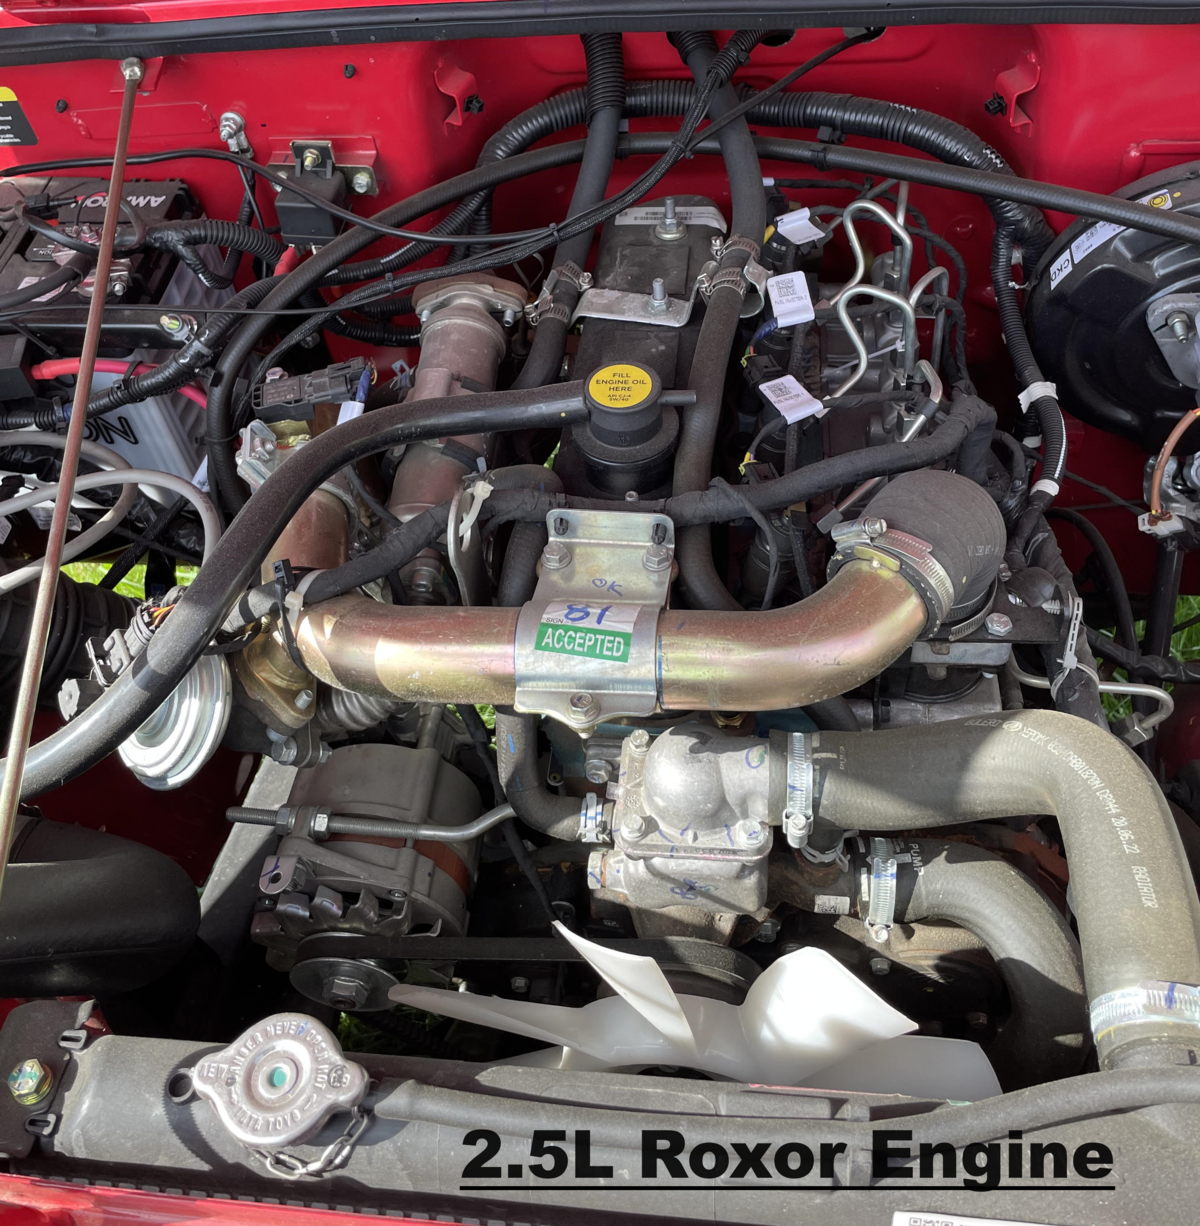 2.5L-Roxor-Engine.png